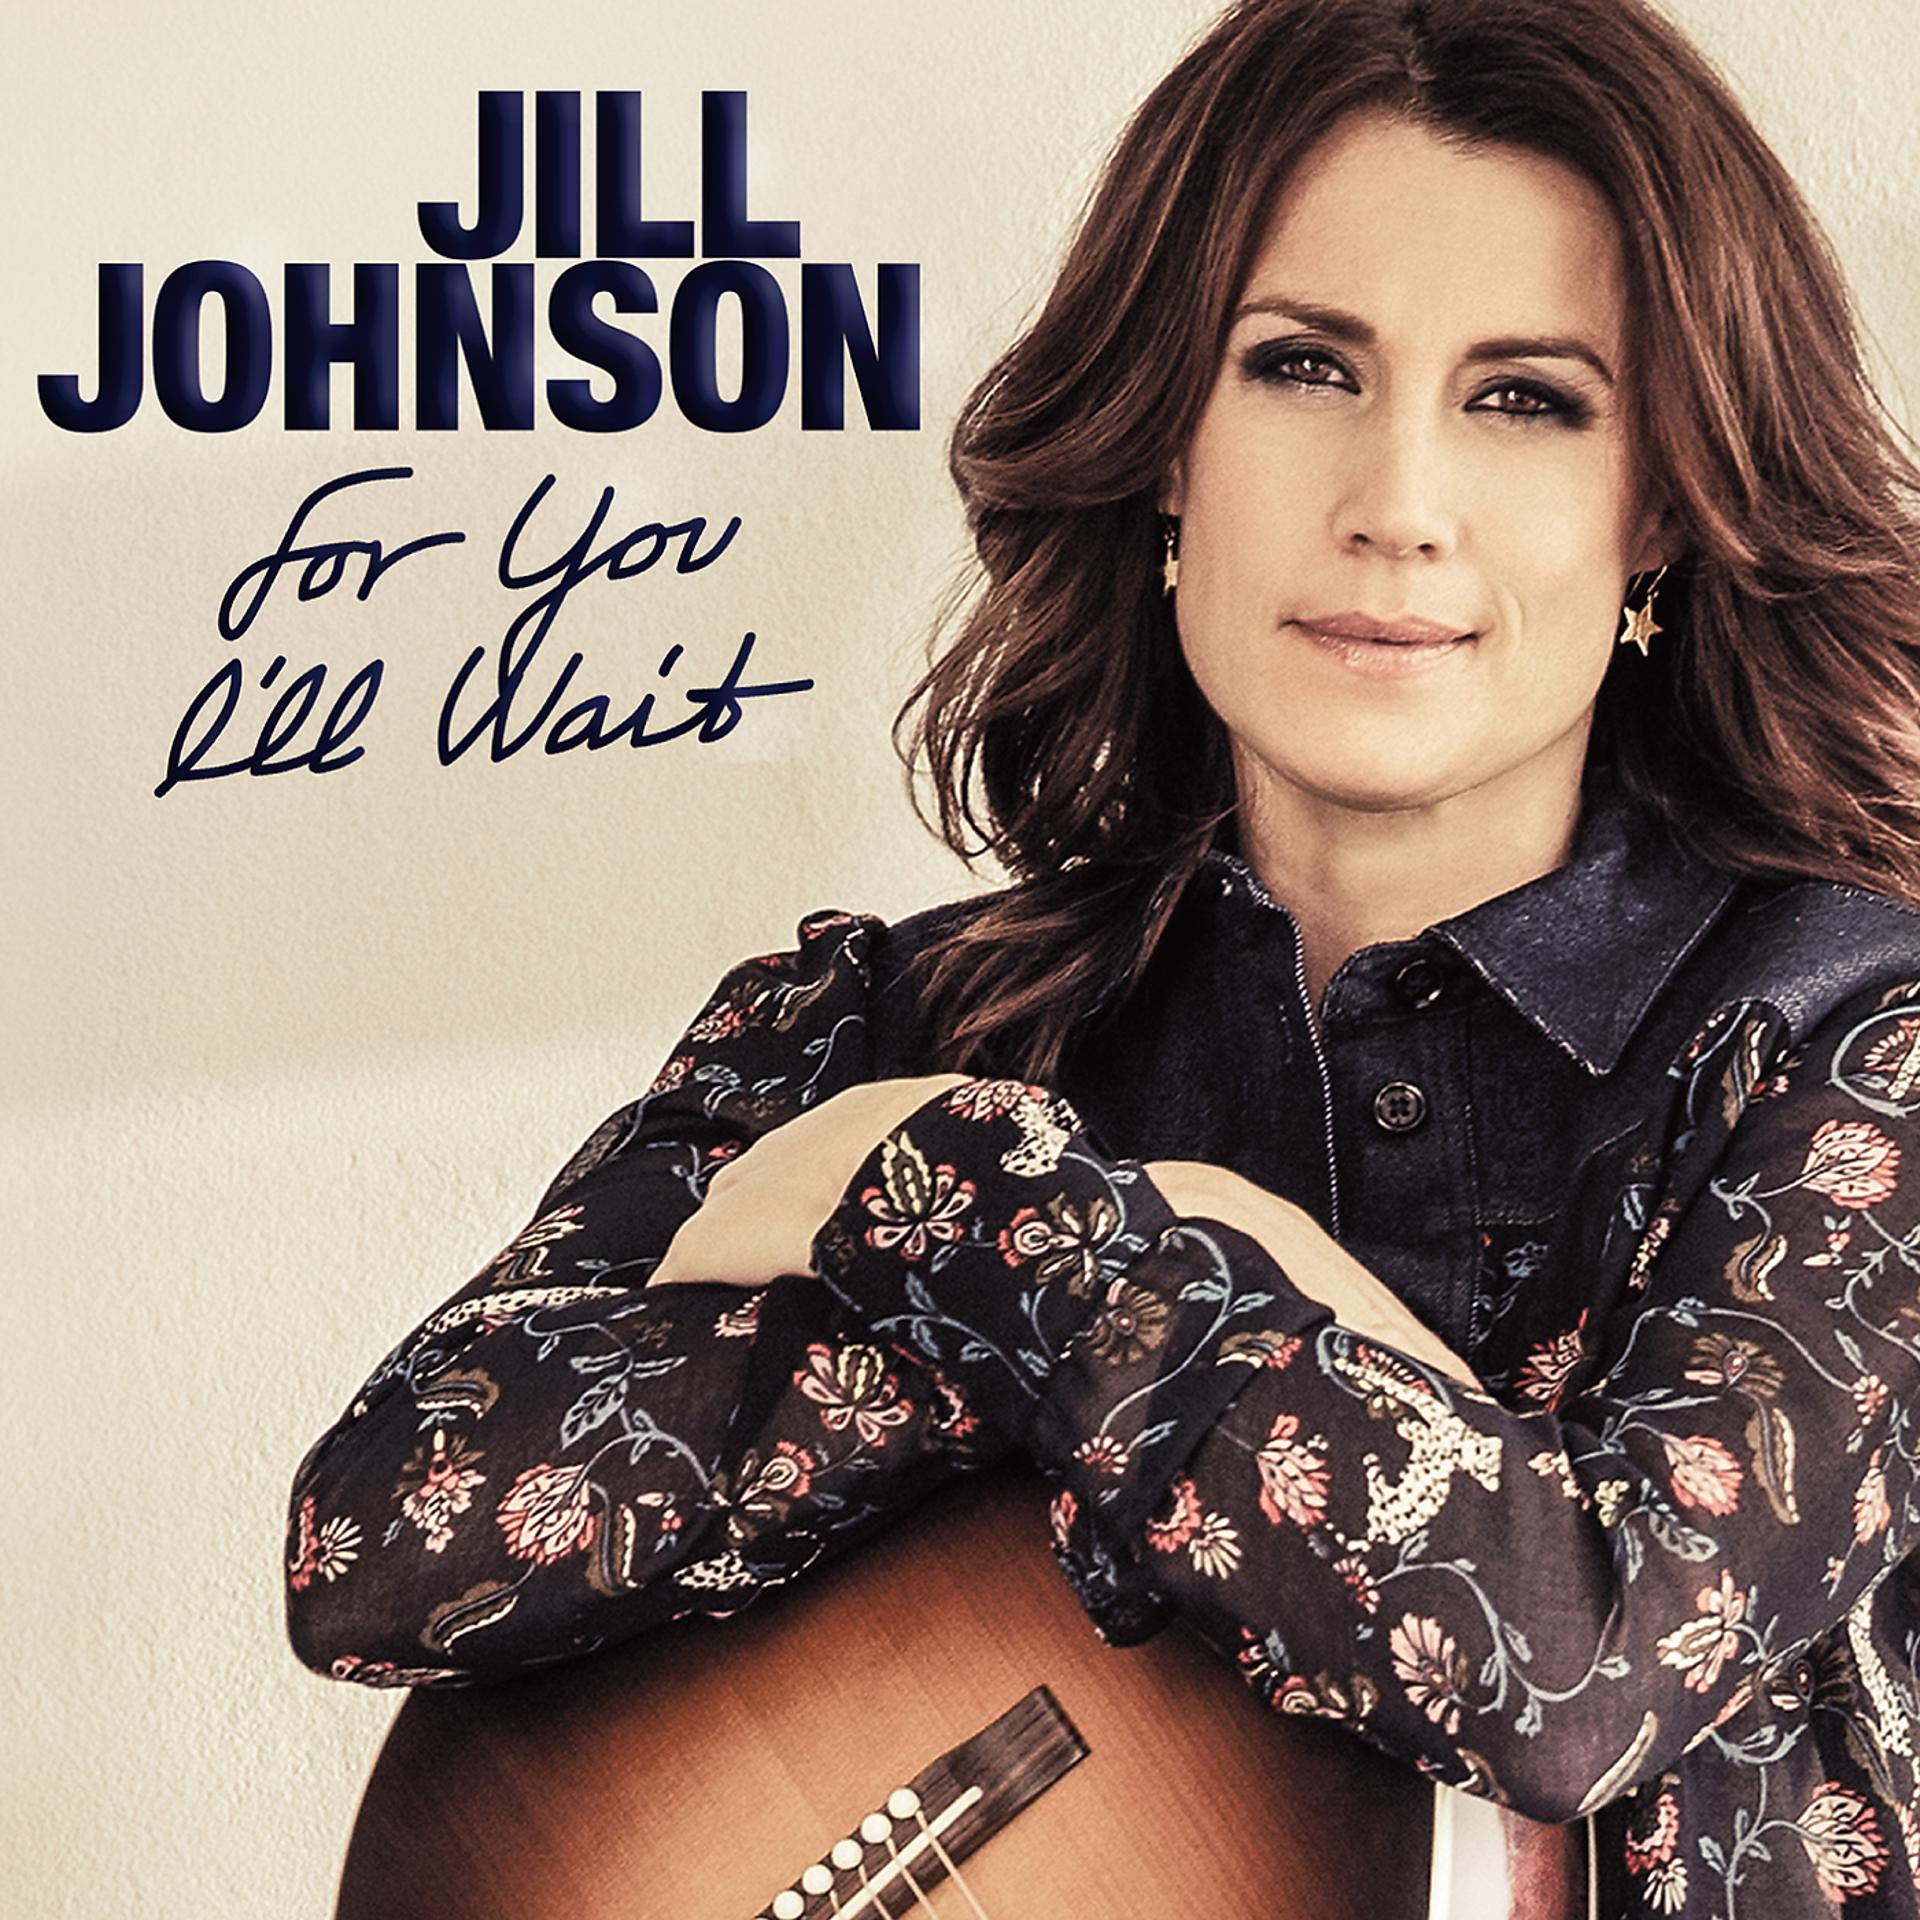 Постер к треку Jill Johnson - For You I'll Wait